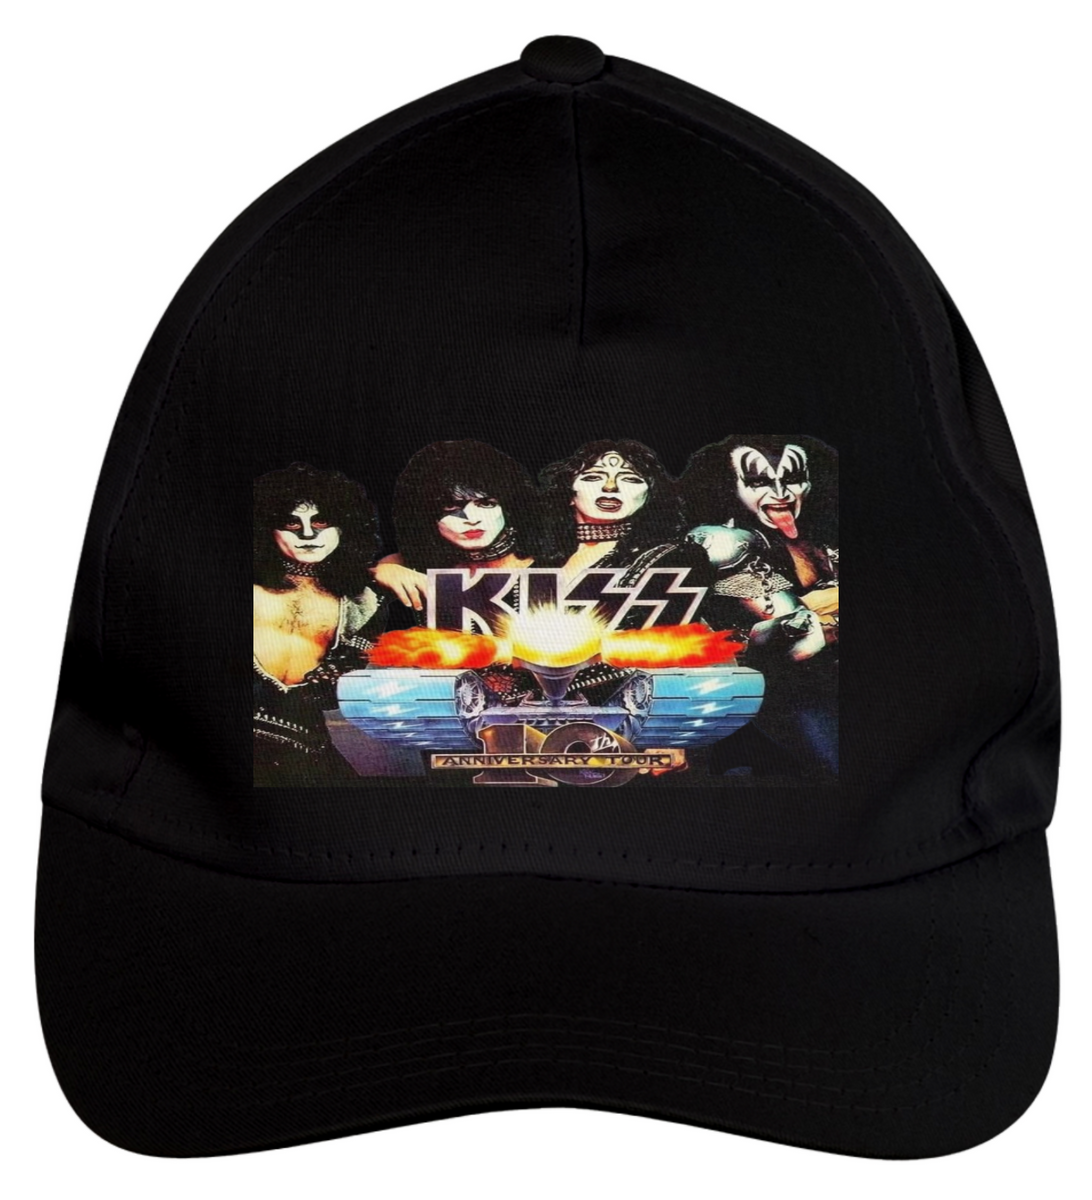 Nome do produto: Kiss - 10th Anniversary Tour